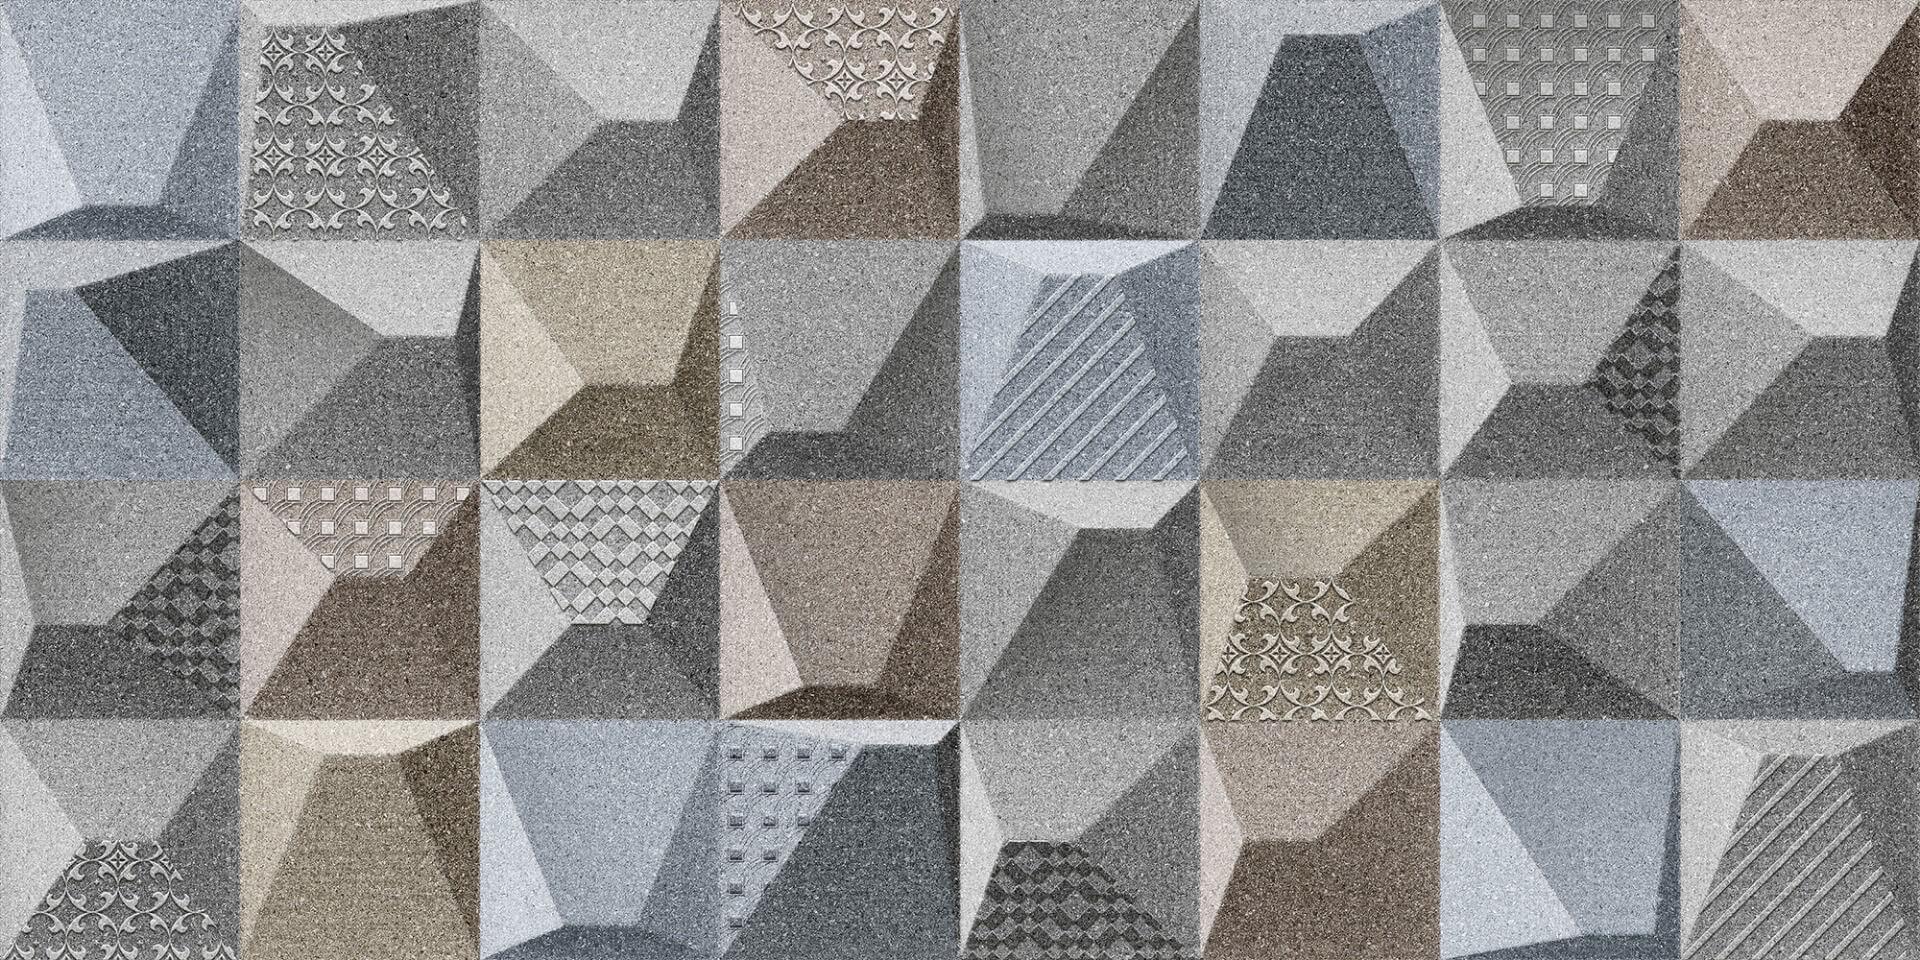 Digital Tiles for Bathroom Tiles, Kitchen Tiles, Accent Tiles